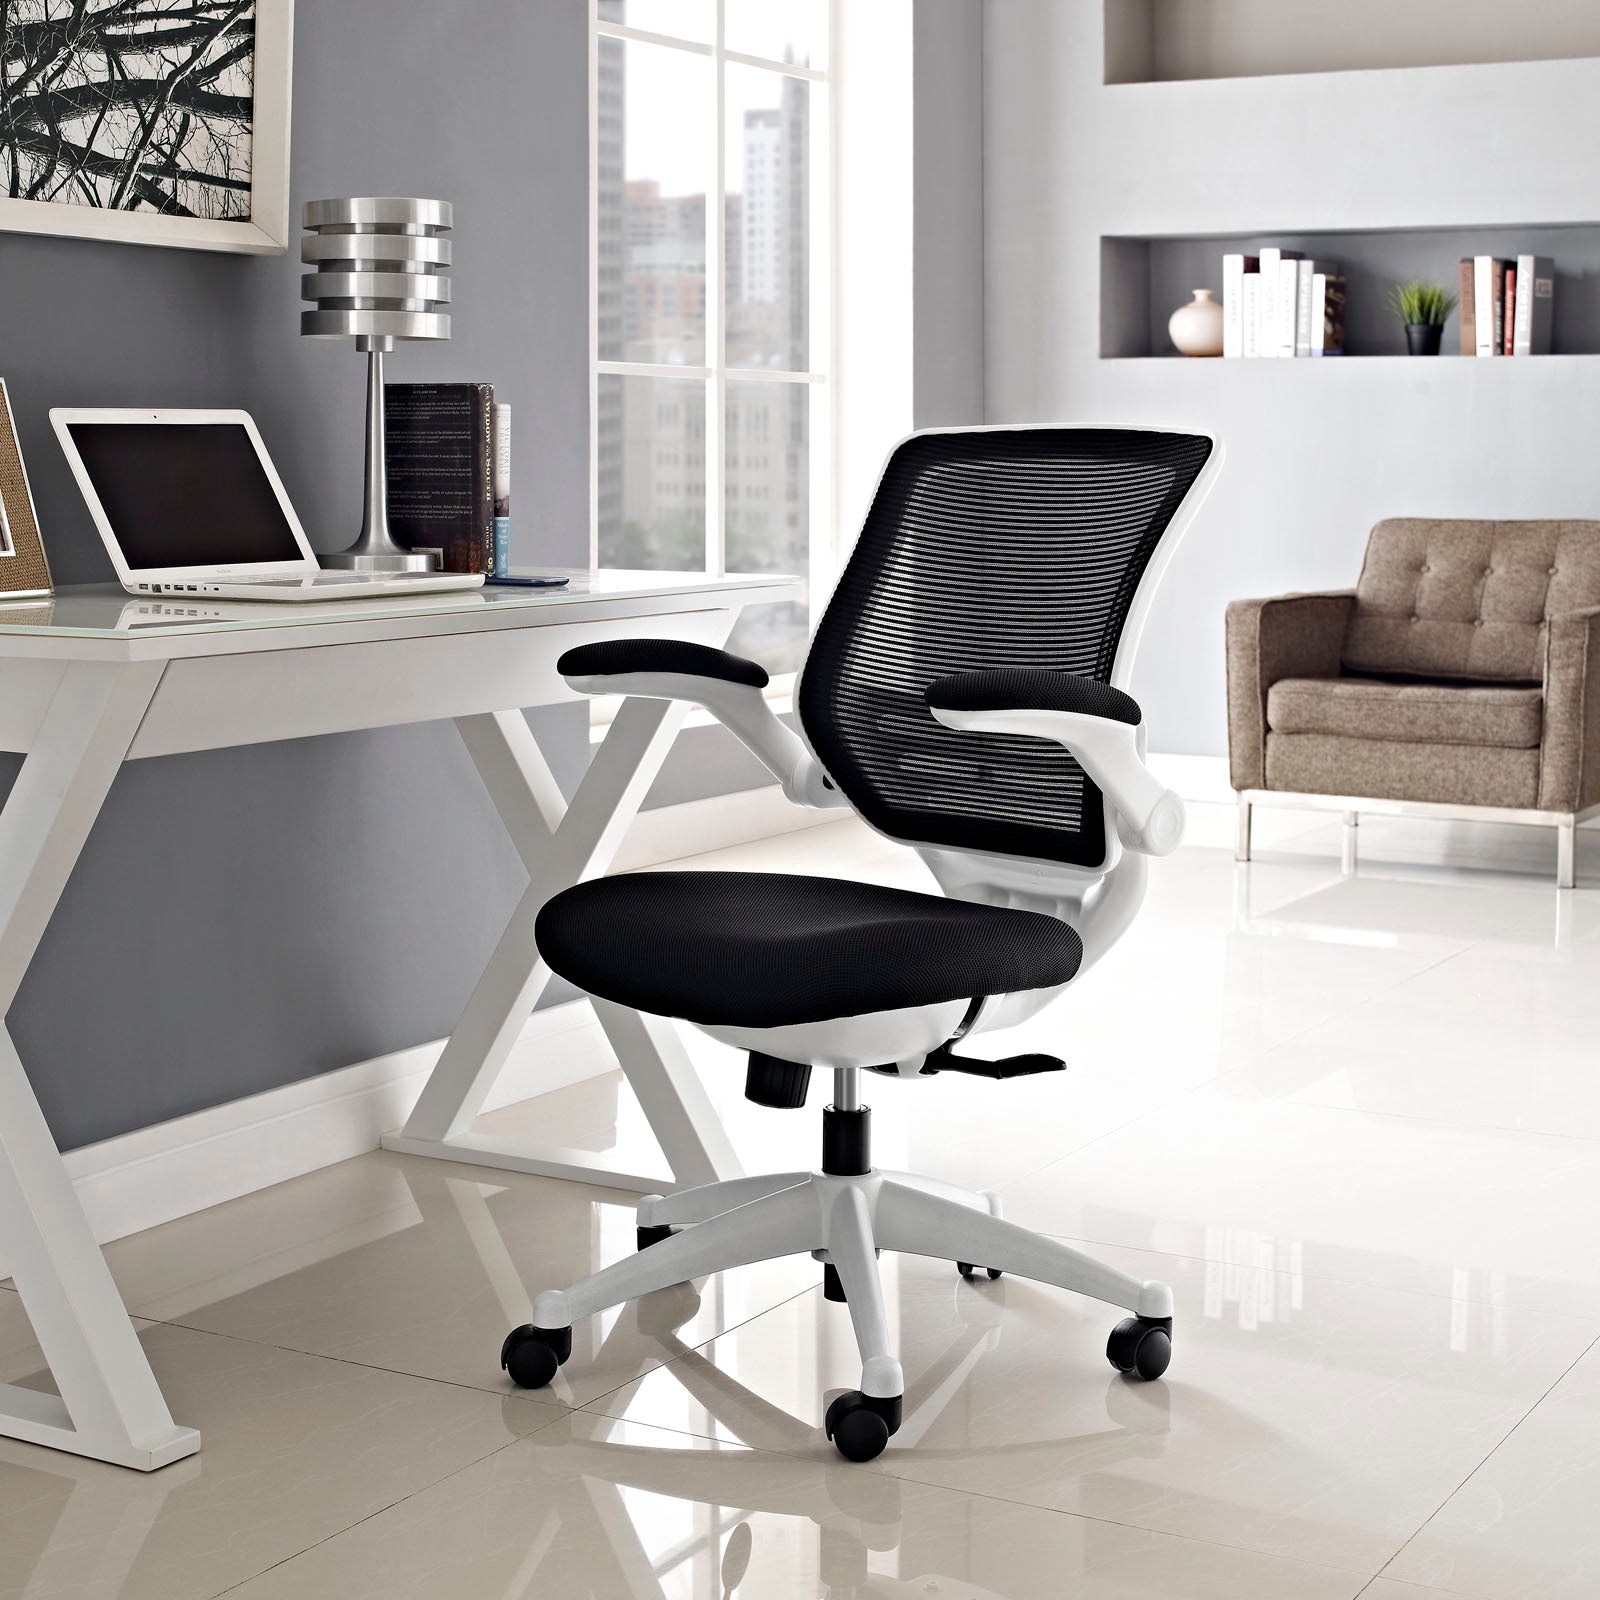 Edge White Base Office Chair - East Shore Modern Home Furnishings